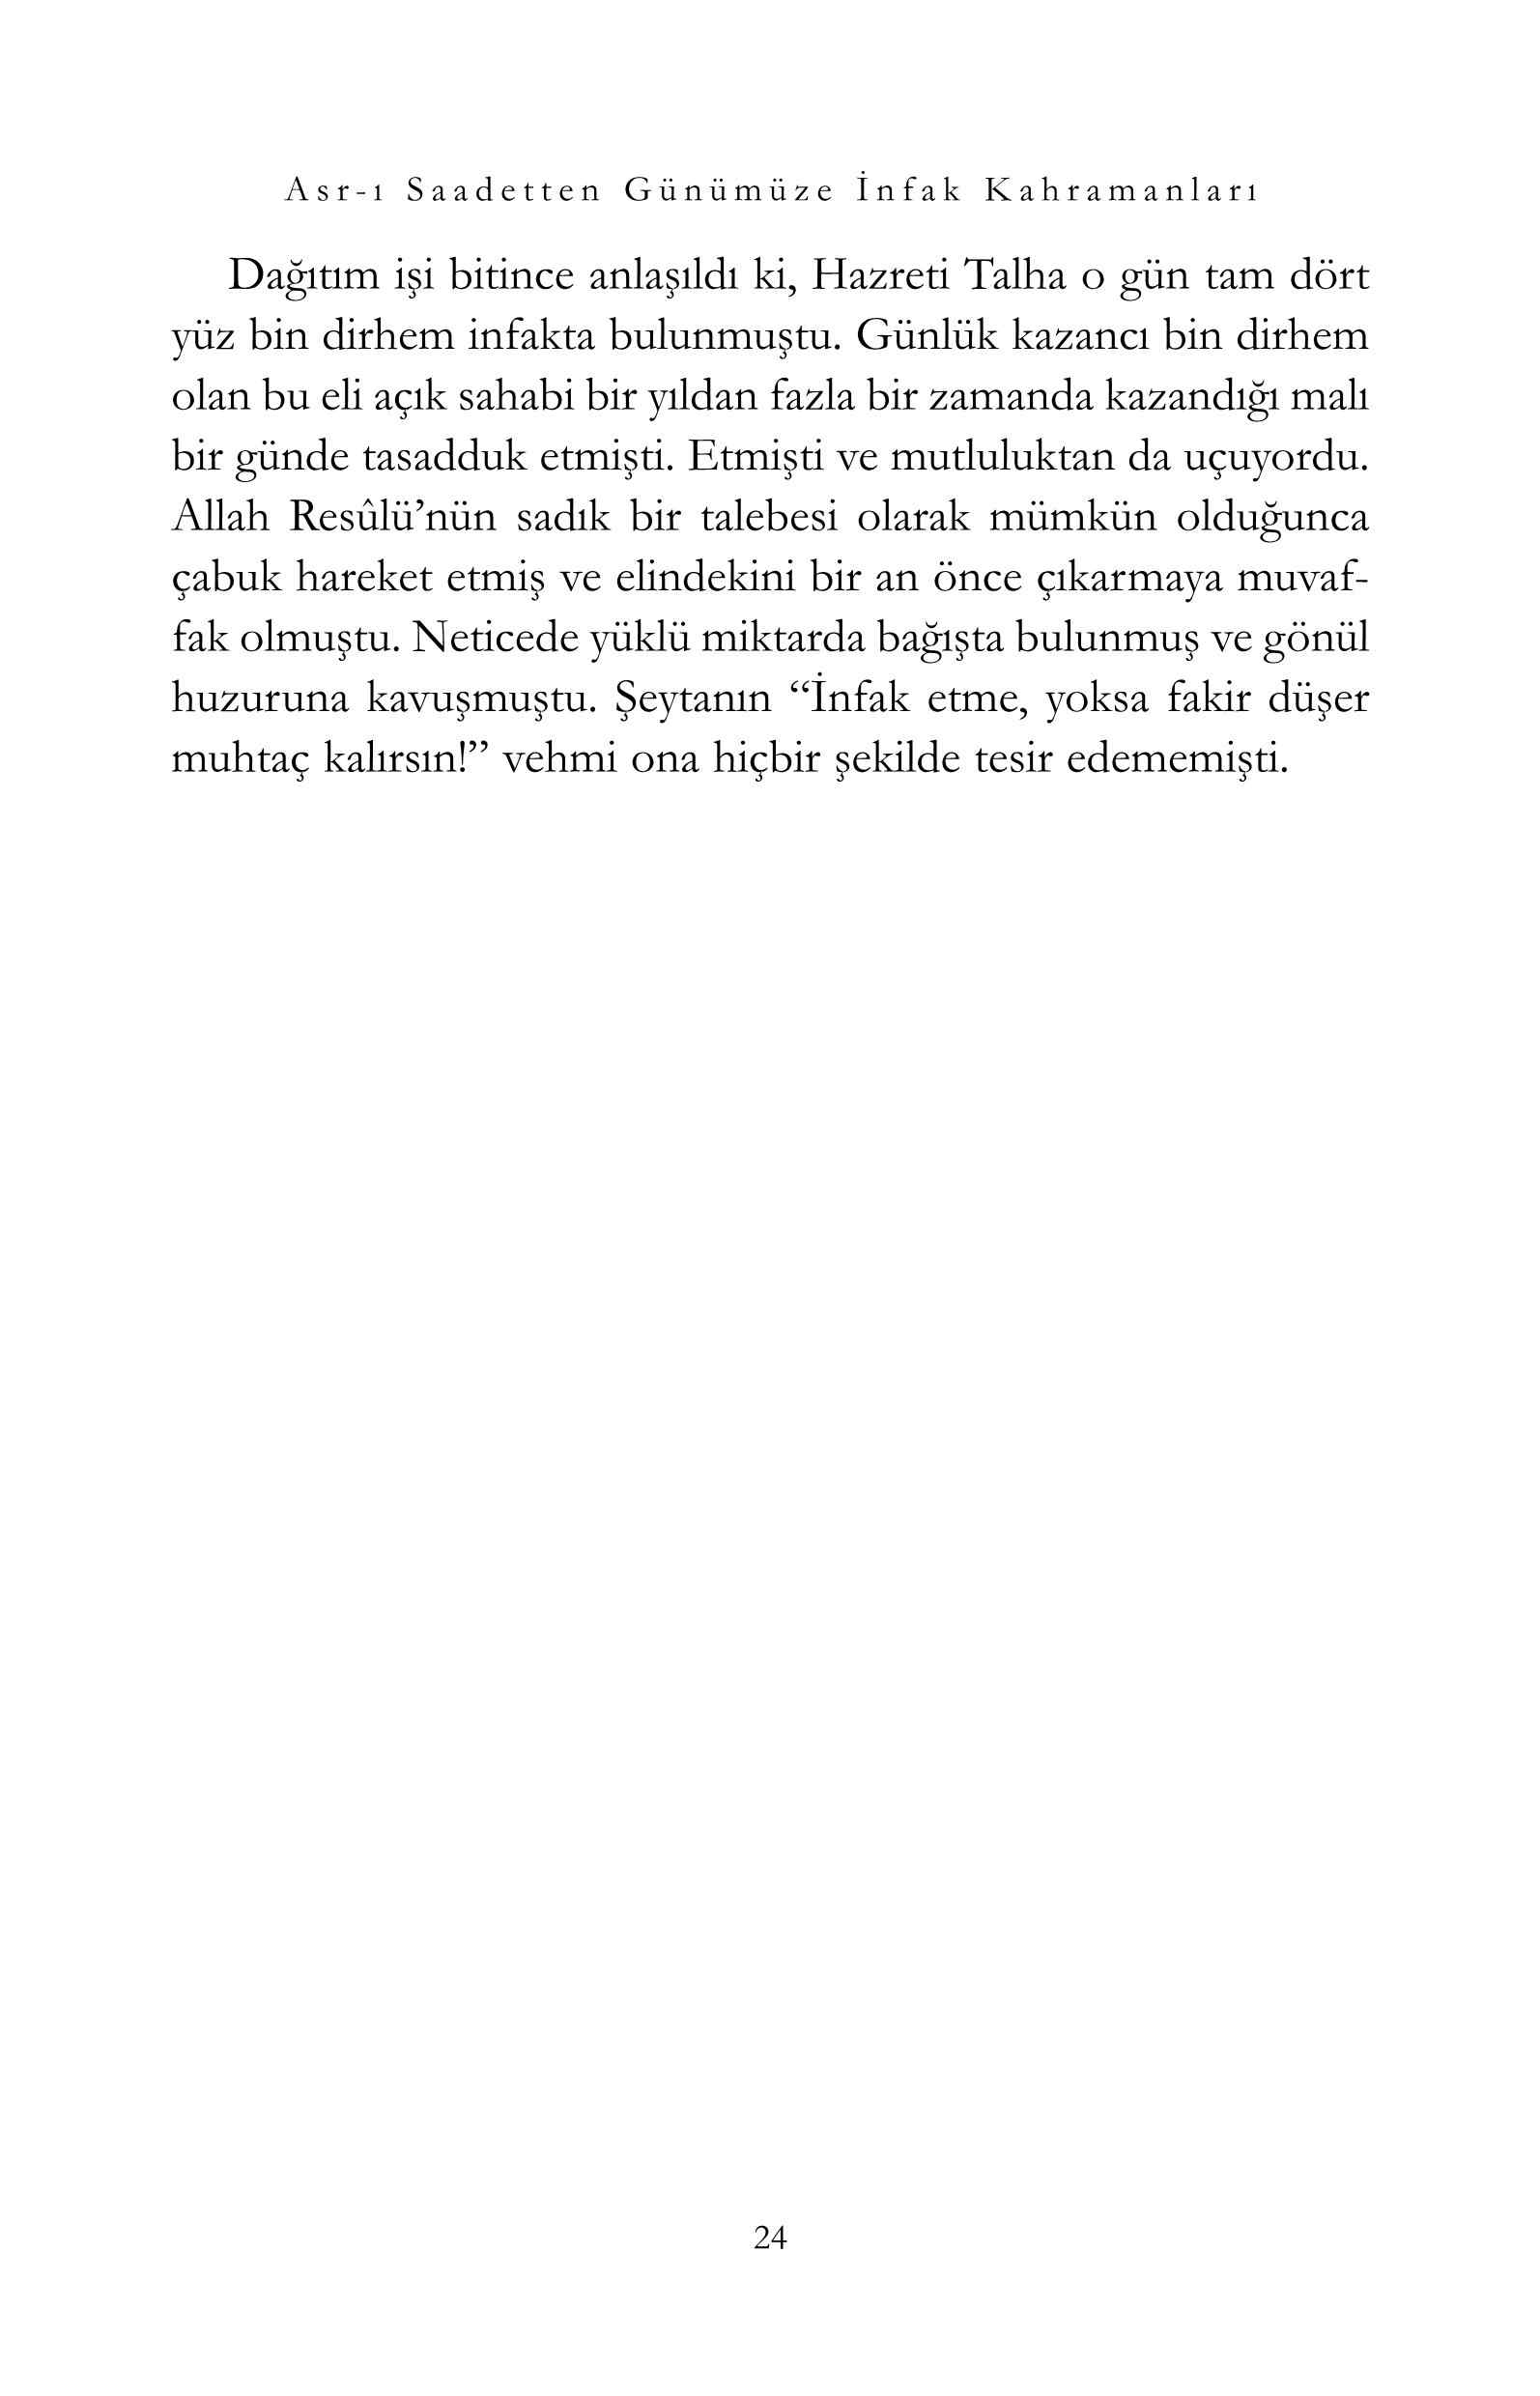 Ali Demirel - Asr-i Saadetten Gunumuze infak Kahramanlari - IsikYayinlari.pdf, 161-Sayfa 